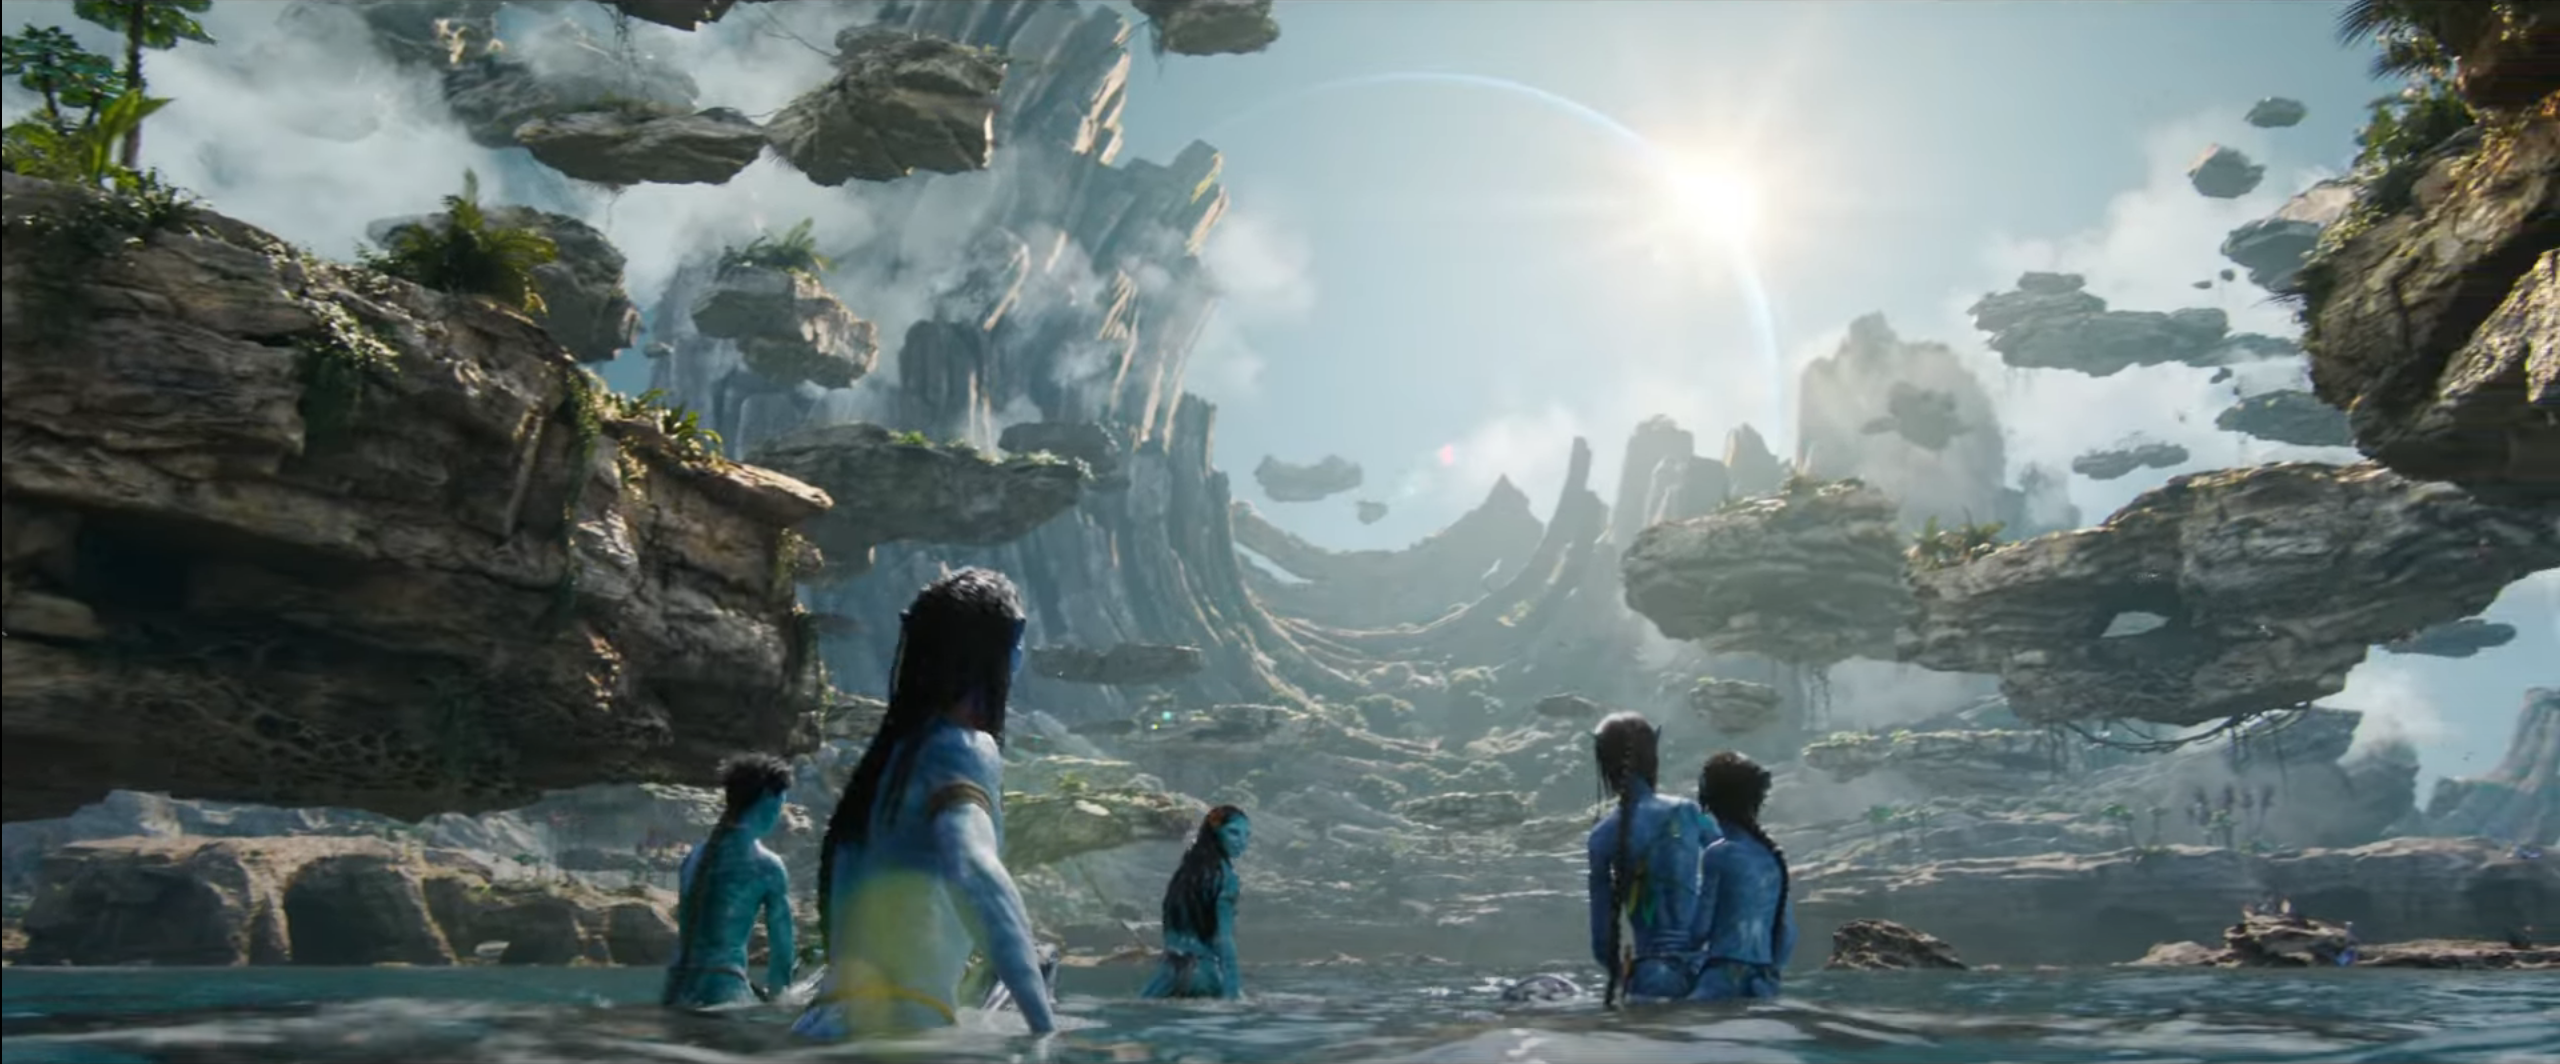 Blue Na’vi aliens walk through water against a fantastical backdrop of floating rocks